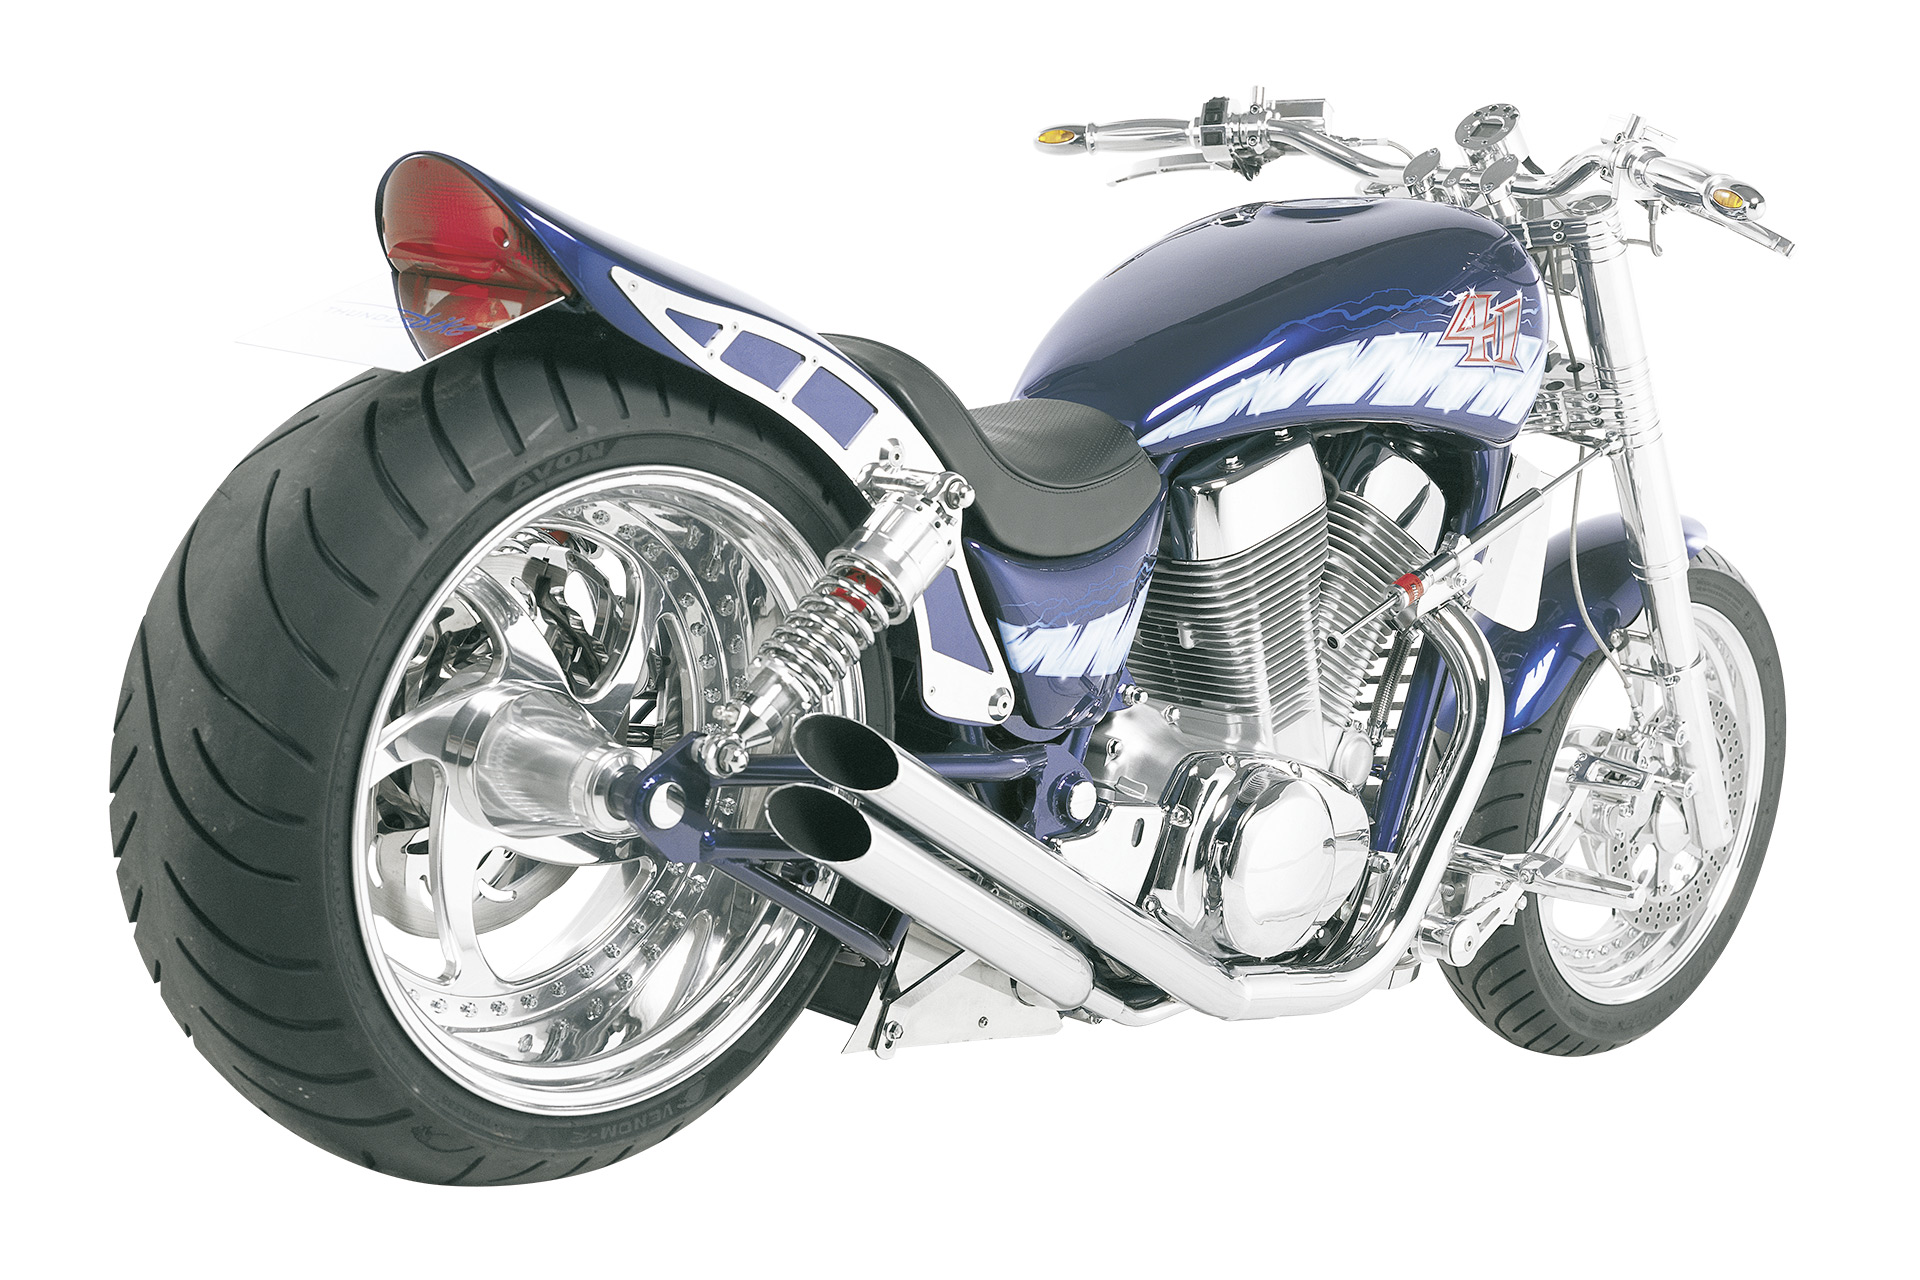 Customized Suzuki VS1400 Motorcycles by Thunderbike